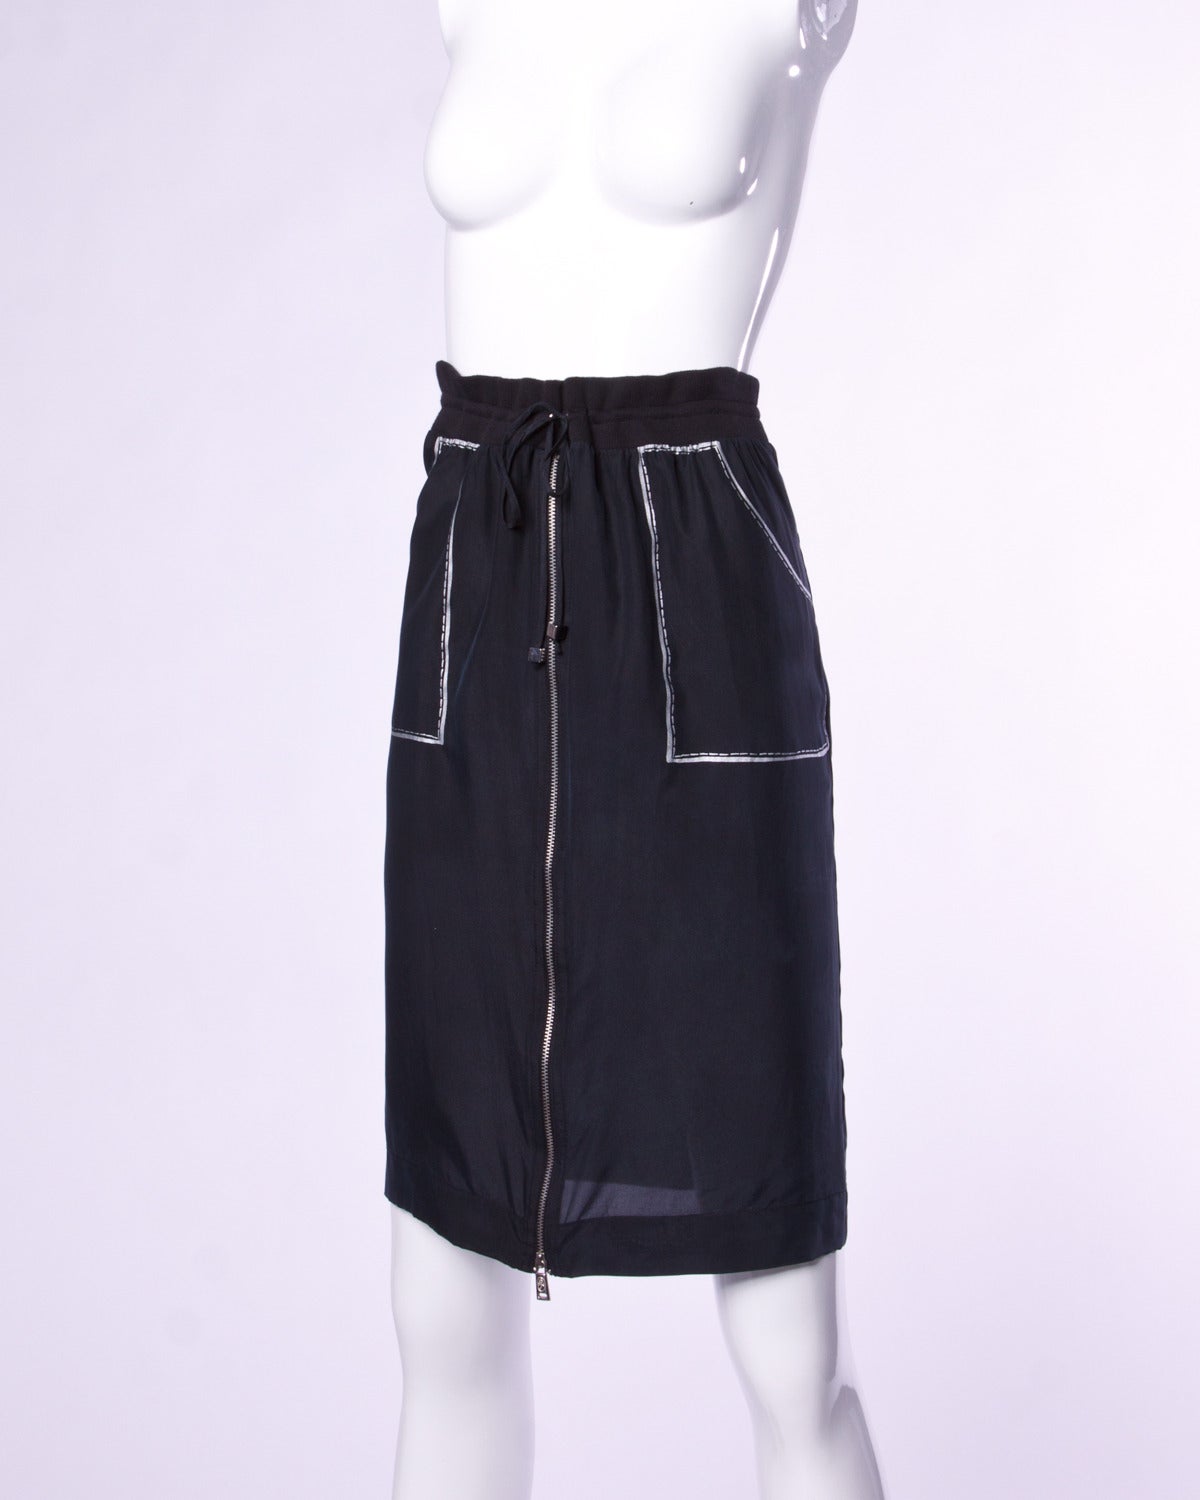 Fantastic JC de Castelbajac black silk skirt with trompe l'oeil faux cartoon stitching and pockets. 

Details:

Unlined
Front Metal Zip Closure/ Drawstring at Waist
Marked Size: 42
Color: Black/ Silver
Fabric: Silk
Label: JC de Castelbajac